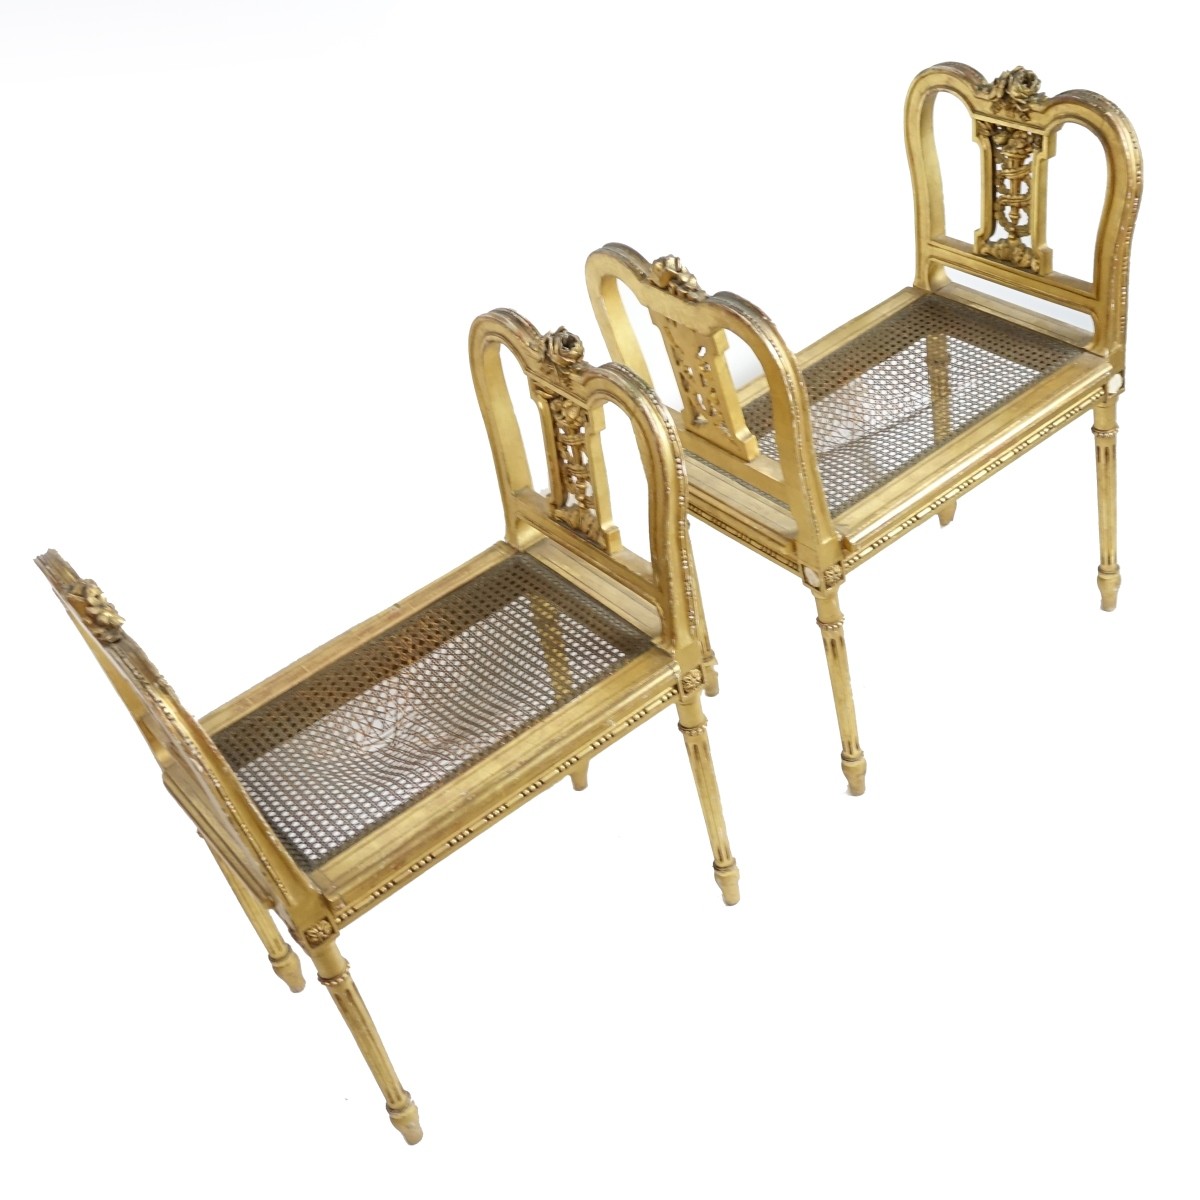 Pair of Louis XVI Style Benches